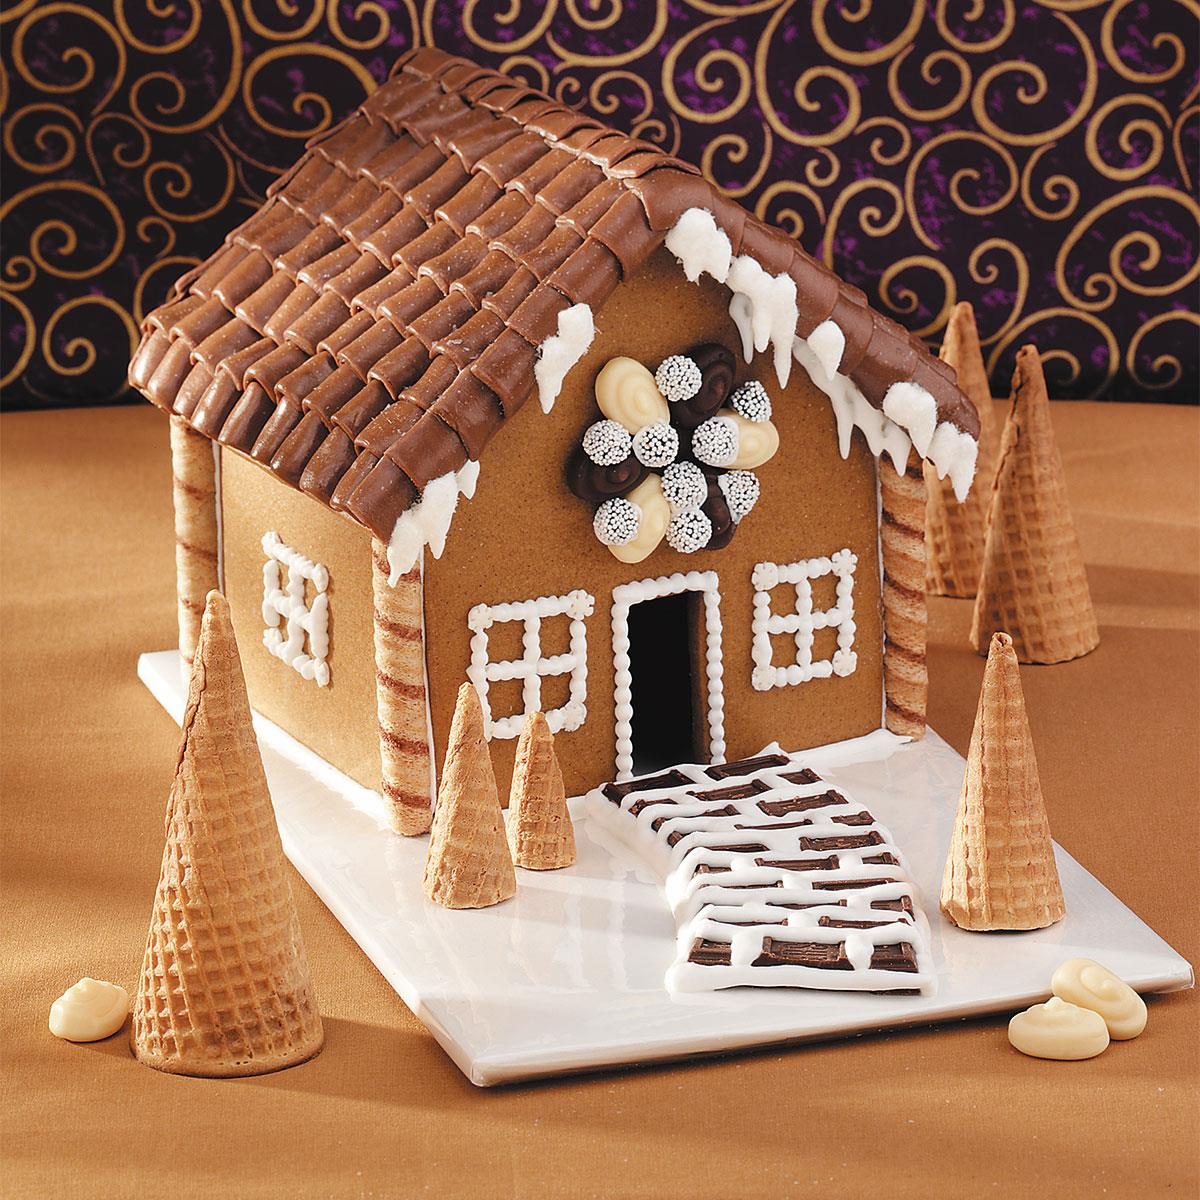 Mini Gingerbread House Recipe How to Make It